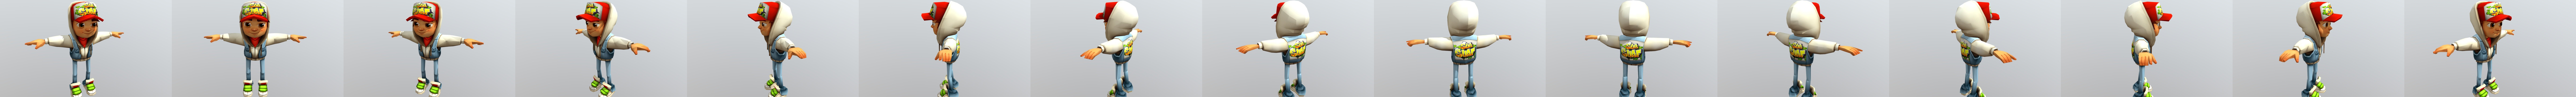 Jake Subway Surfers real - Download Free 3D model by gilmageo000  (@gilmageo000) [825926c]